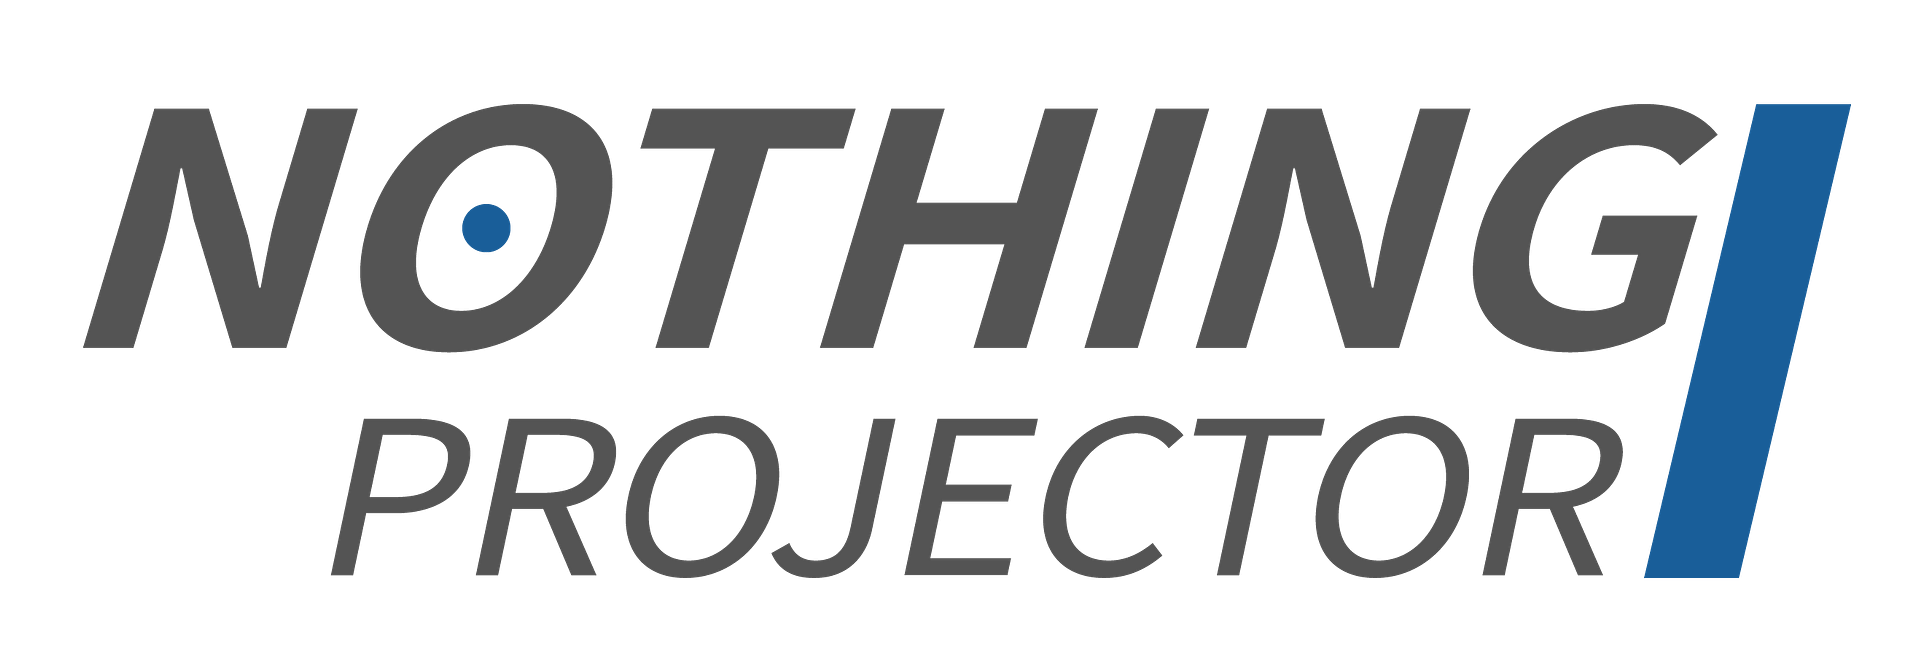 NothingProjector Logo Transparent Background